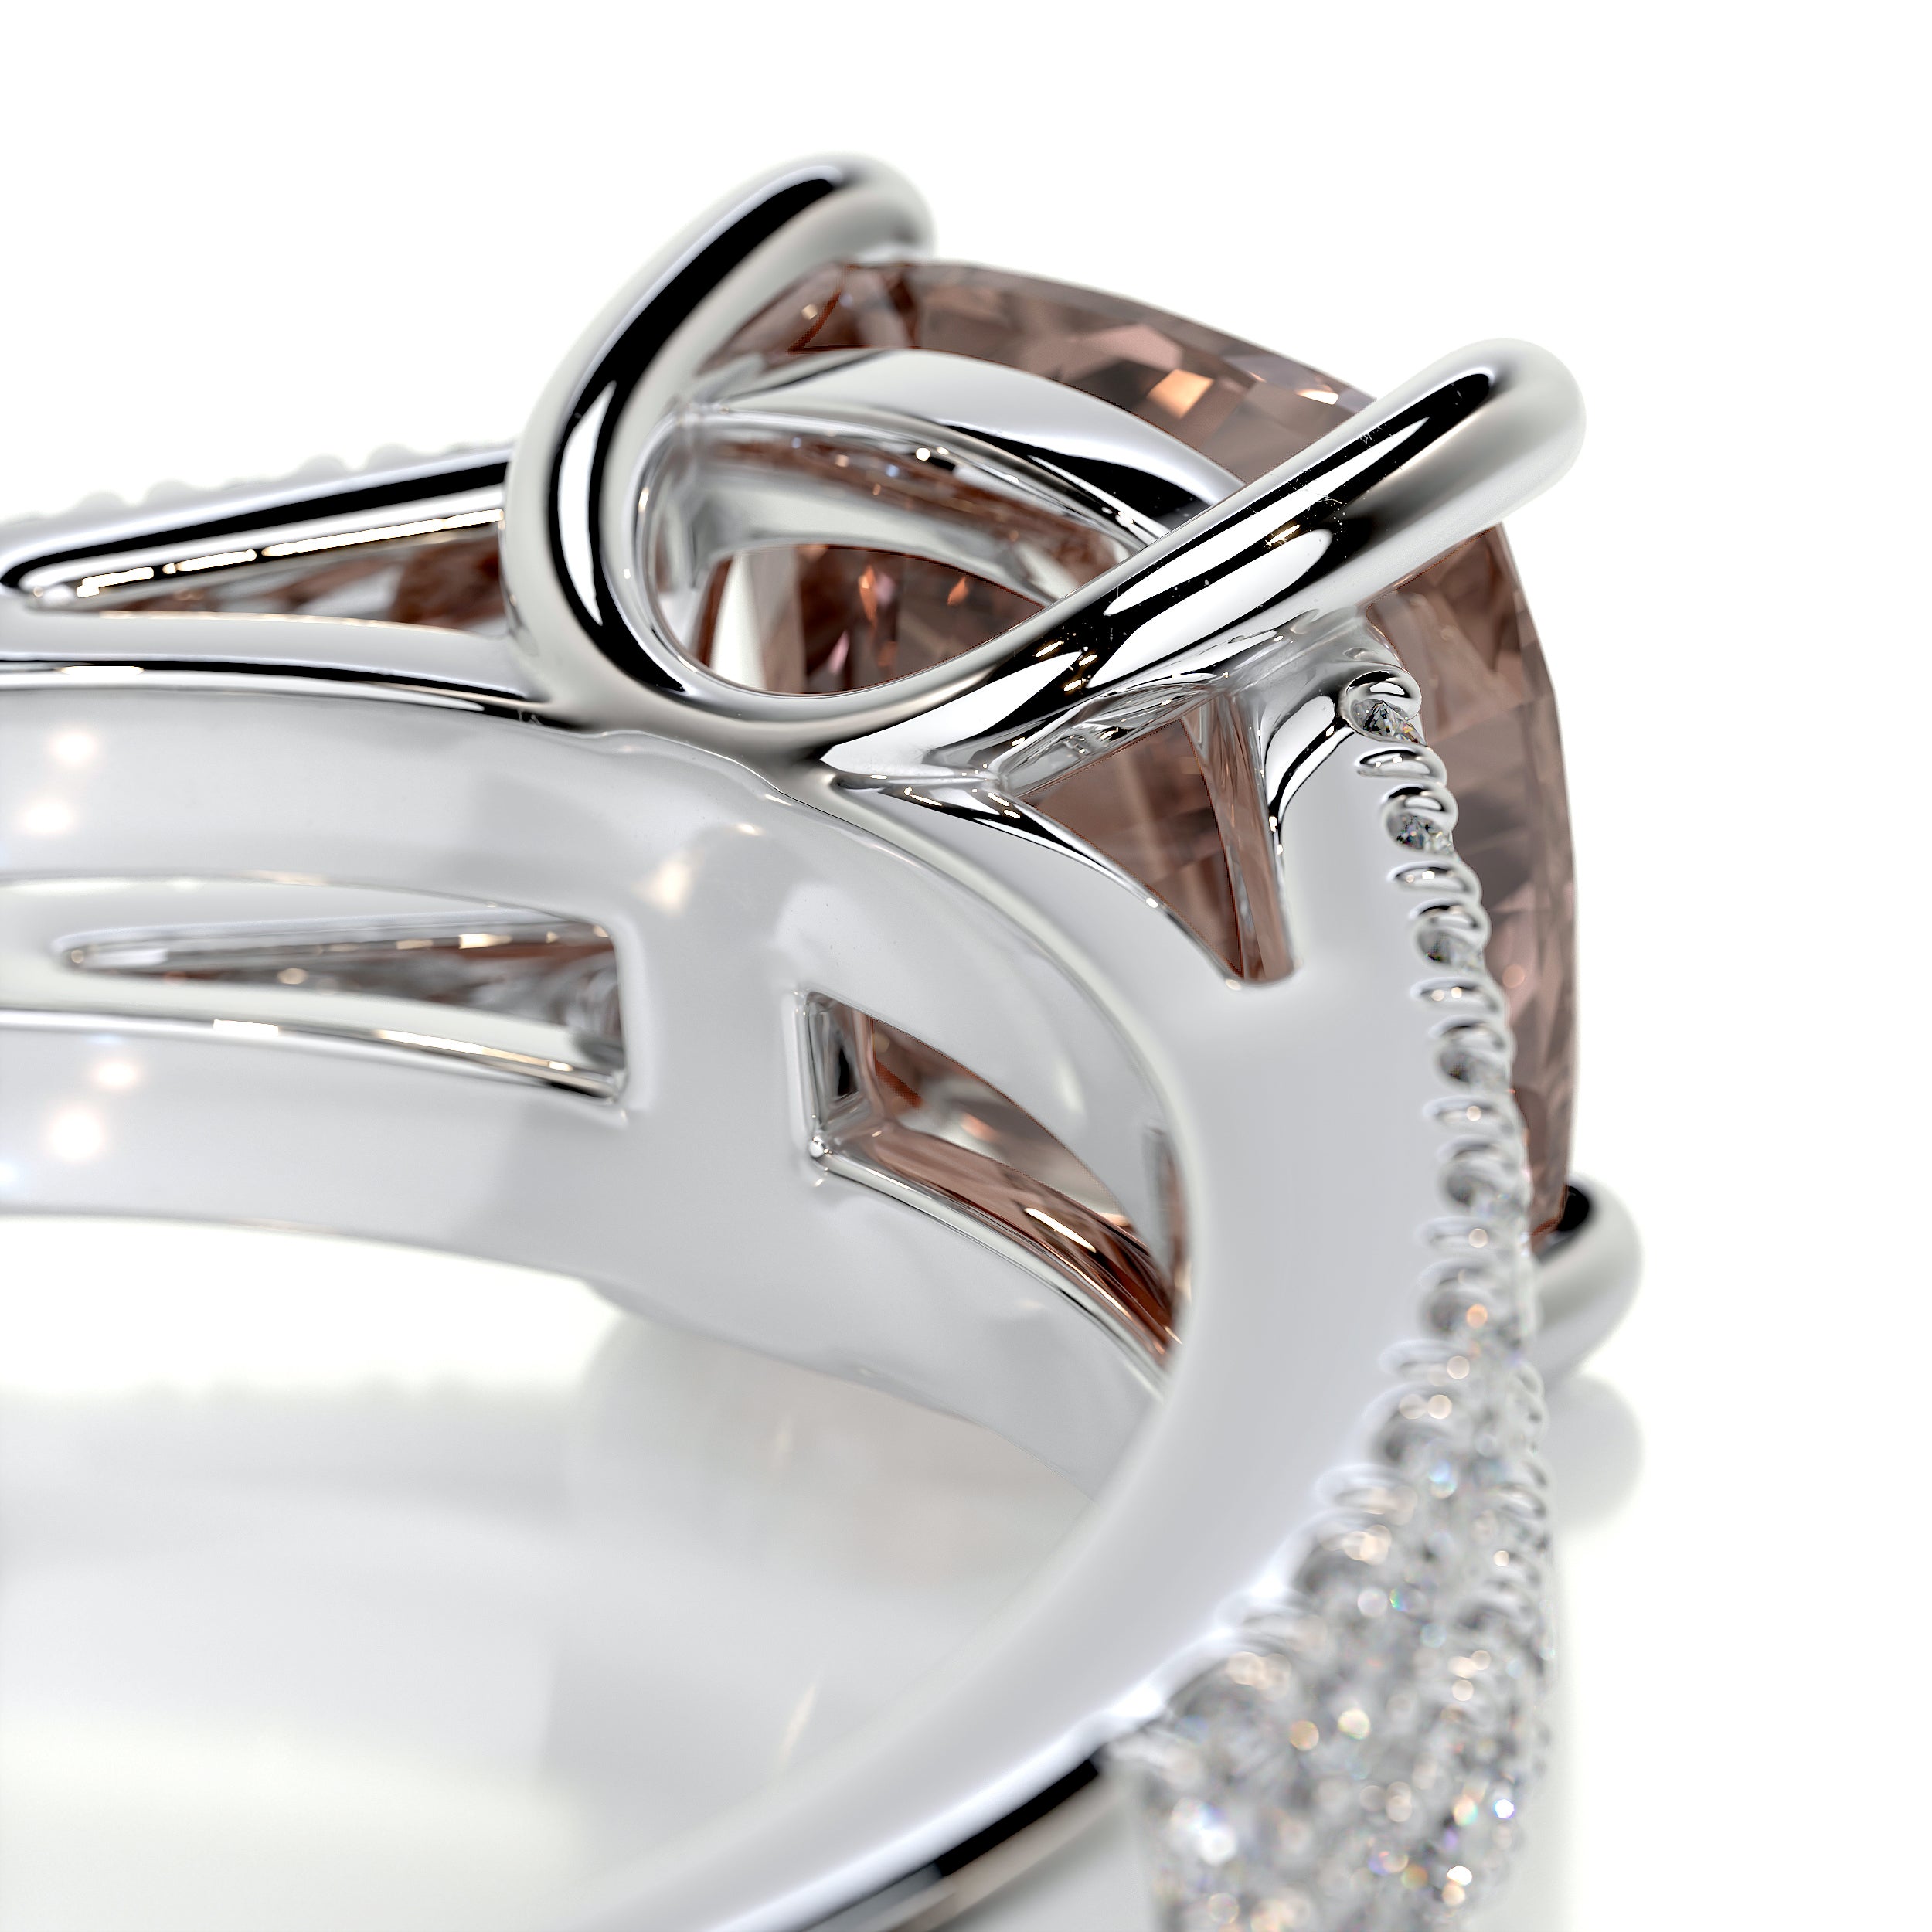 Sadie Gemstone & Diamonds Ring   (2 Carat) -Platinum